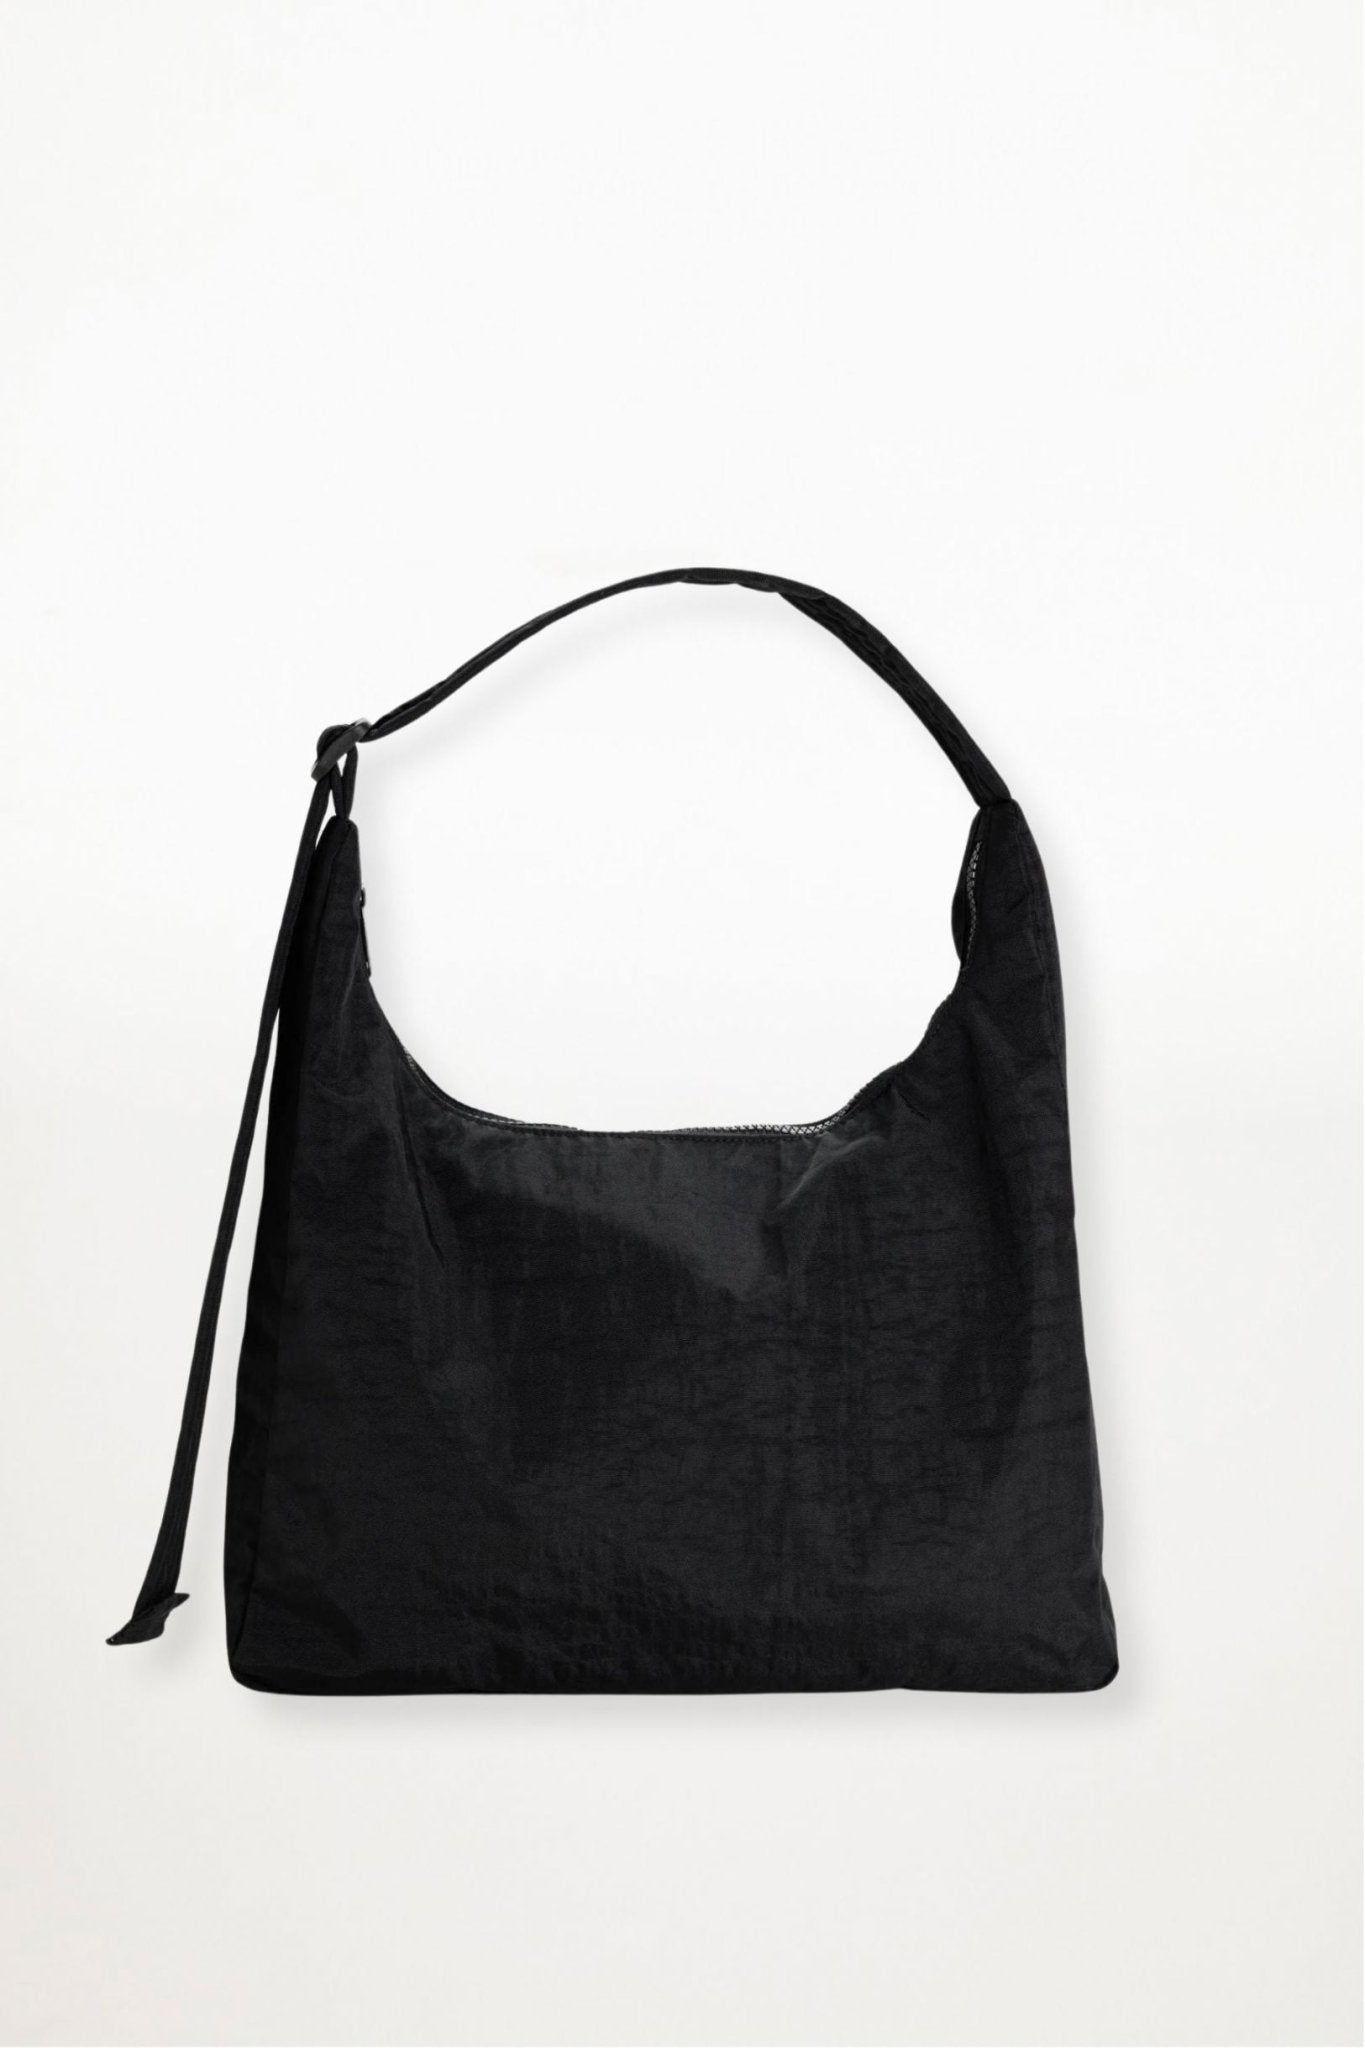 Baggu - Nylon Shoulder Bag - Black - Ensemble Studios